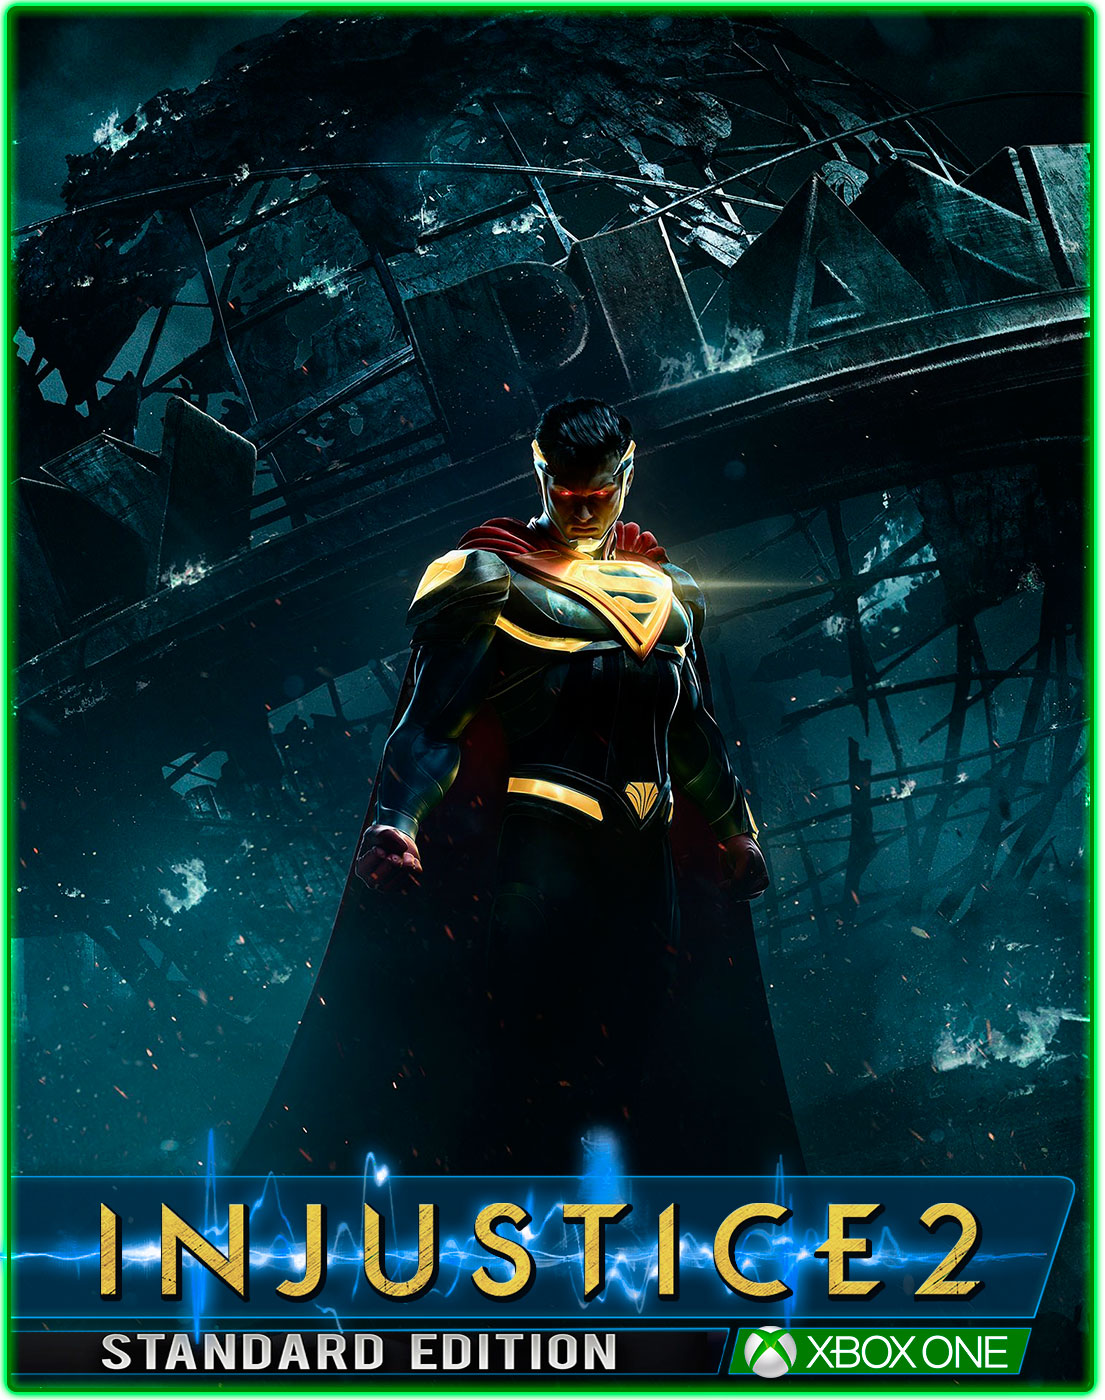 Injustice 2 XBOX ONE/Xbox Series X|S